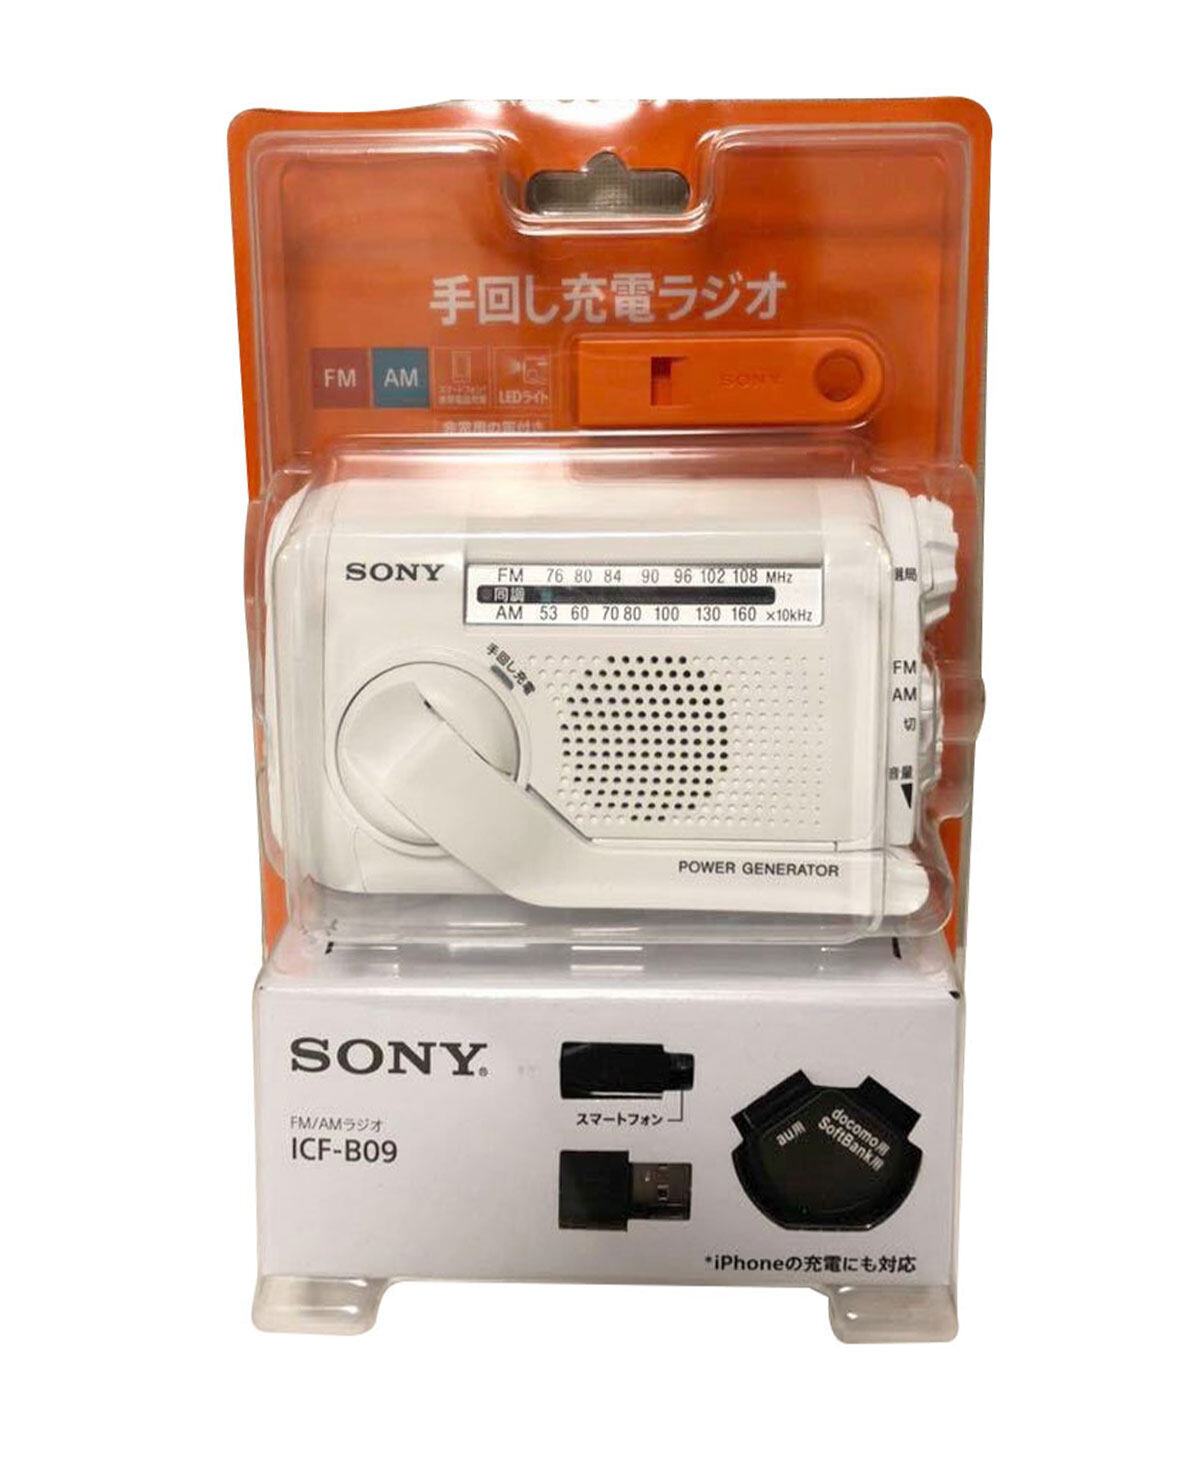 SONY ICF-B99 / ICF-B09 - FM / AM Portable Radio Hand-Cranked and